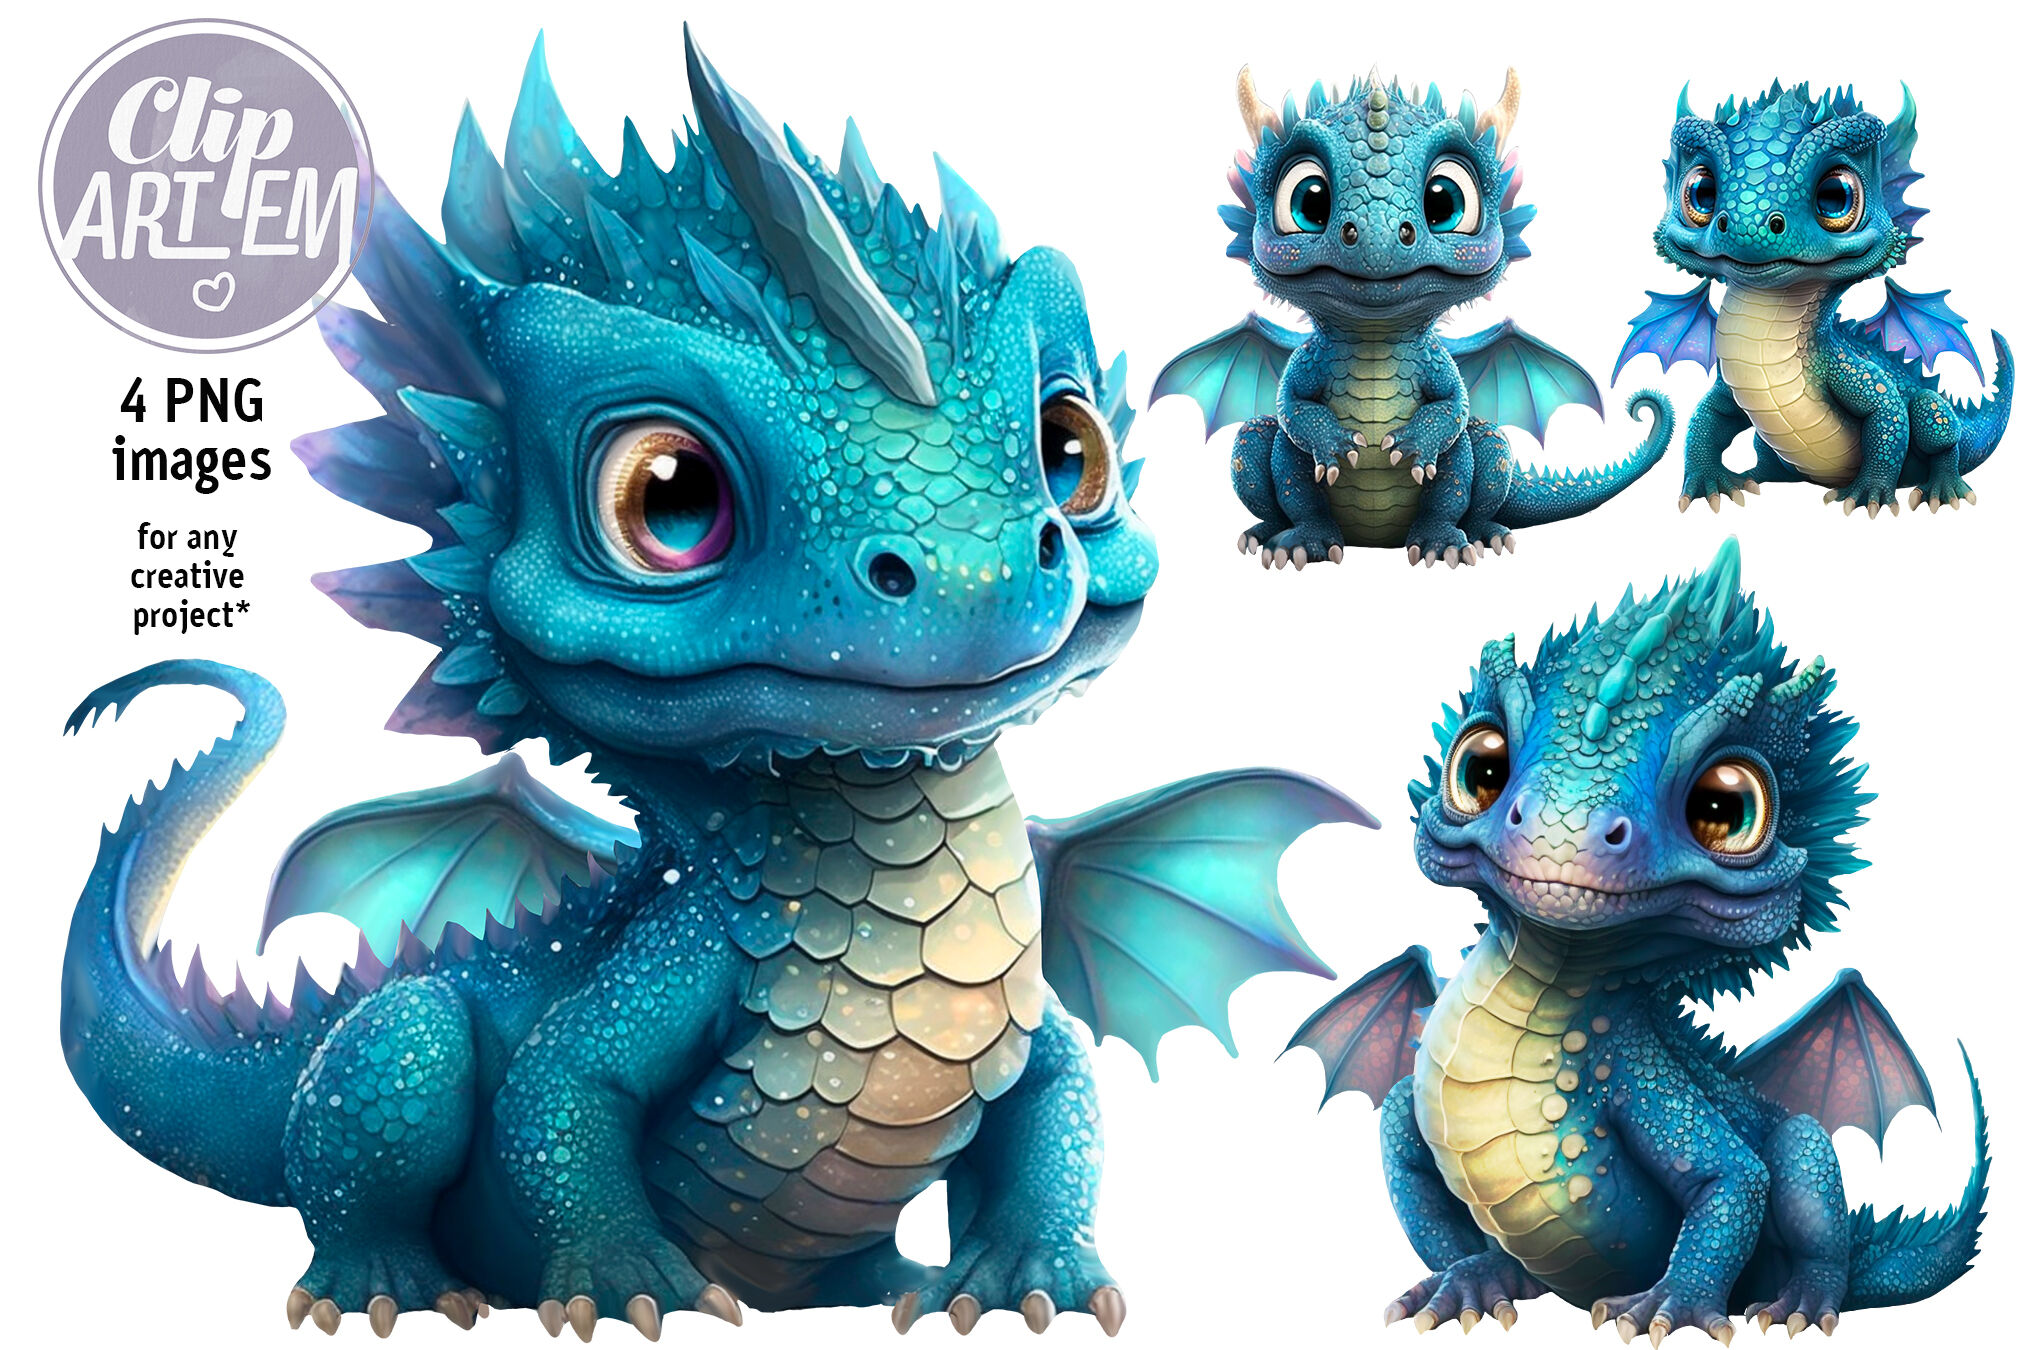 https://media1.thehungryjpeg.com/thumbs2/ori_4258296_9sajaz0jnlia5uhbcxad3bwx7qt4y6vir2nw257k_young-blue-dragon-cute-4-png-images-set-illustration-clip-art-digital.jpg